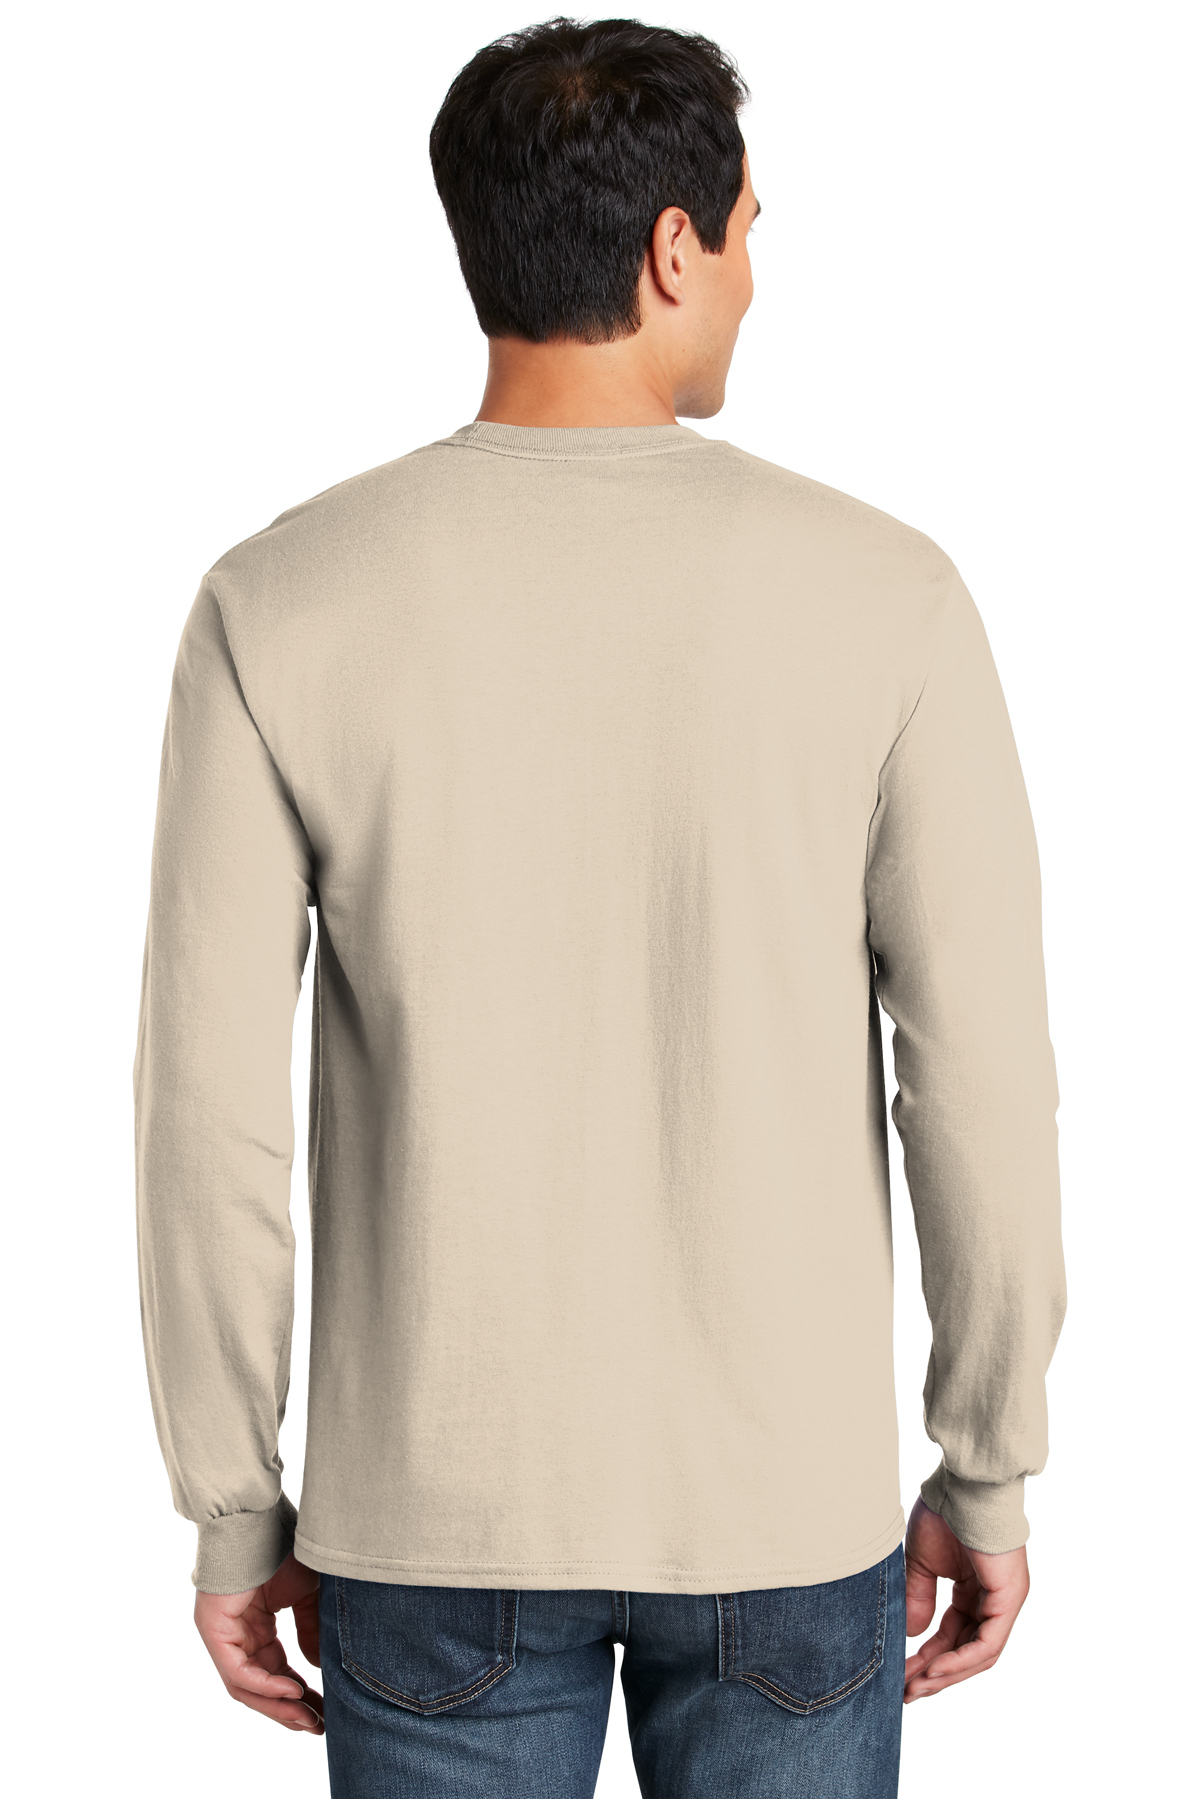 3XL Texas Orange Gildan G2400 Ultra 100 Percent Cotton Long Sleeve T-Shirt 